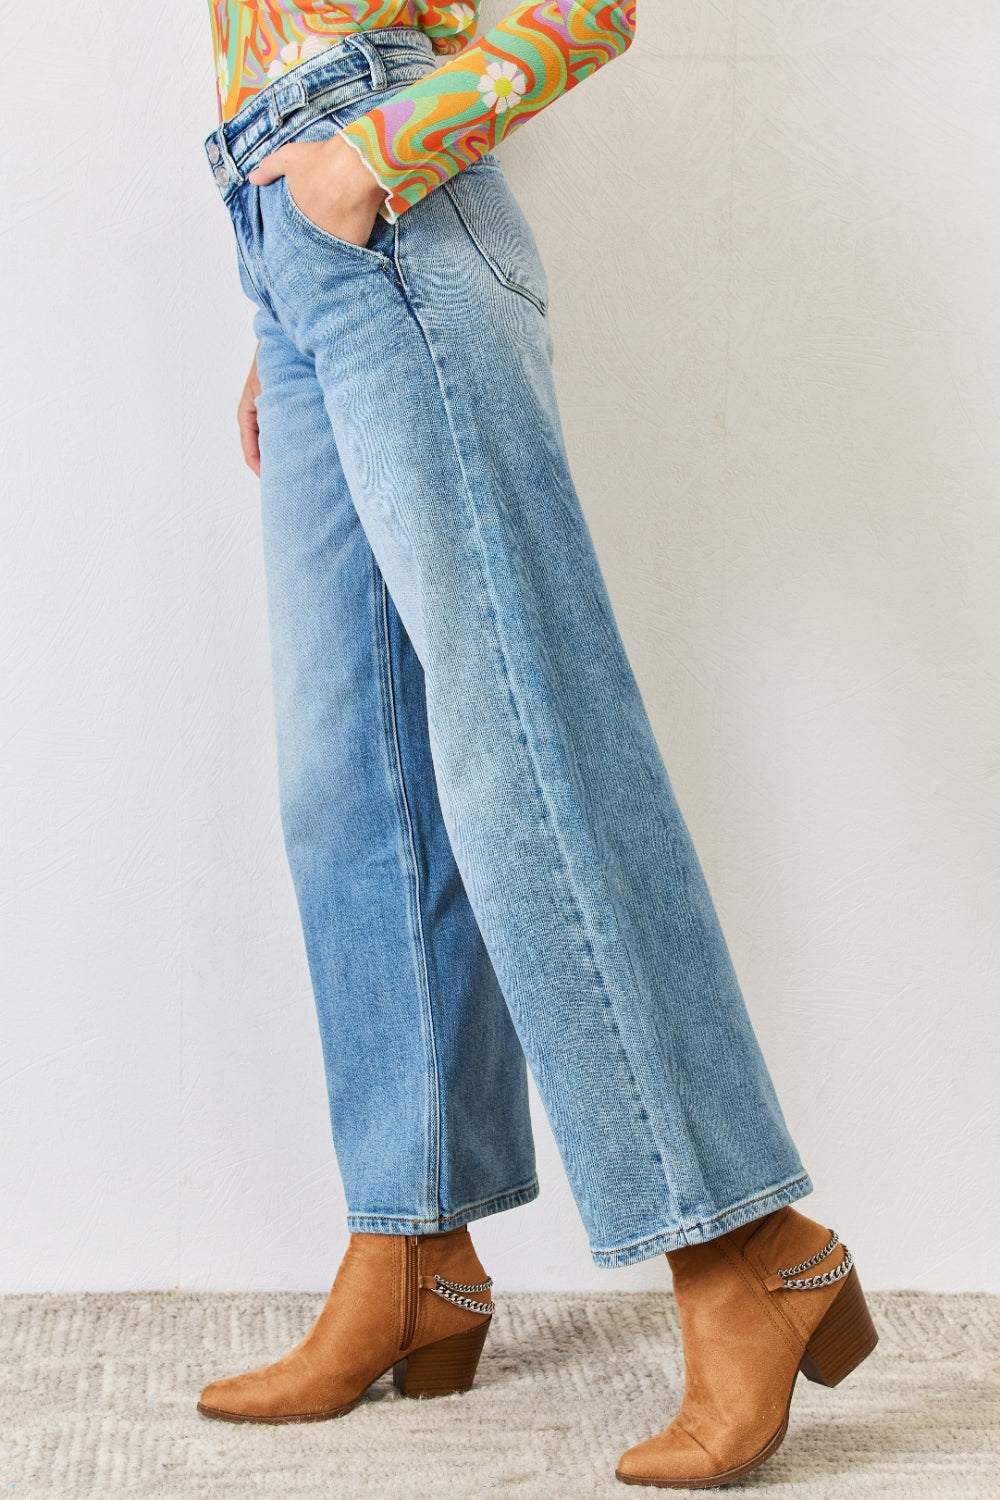 High Waist Wide Leg Jeans KESLEY New Women's Fashion Denim Pants Cotton Luxury Jeans